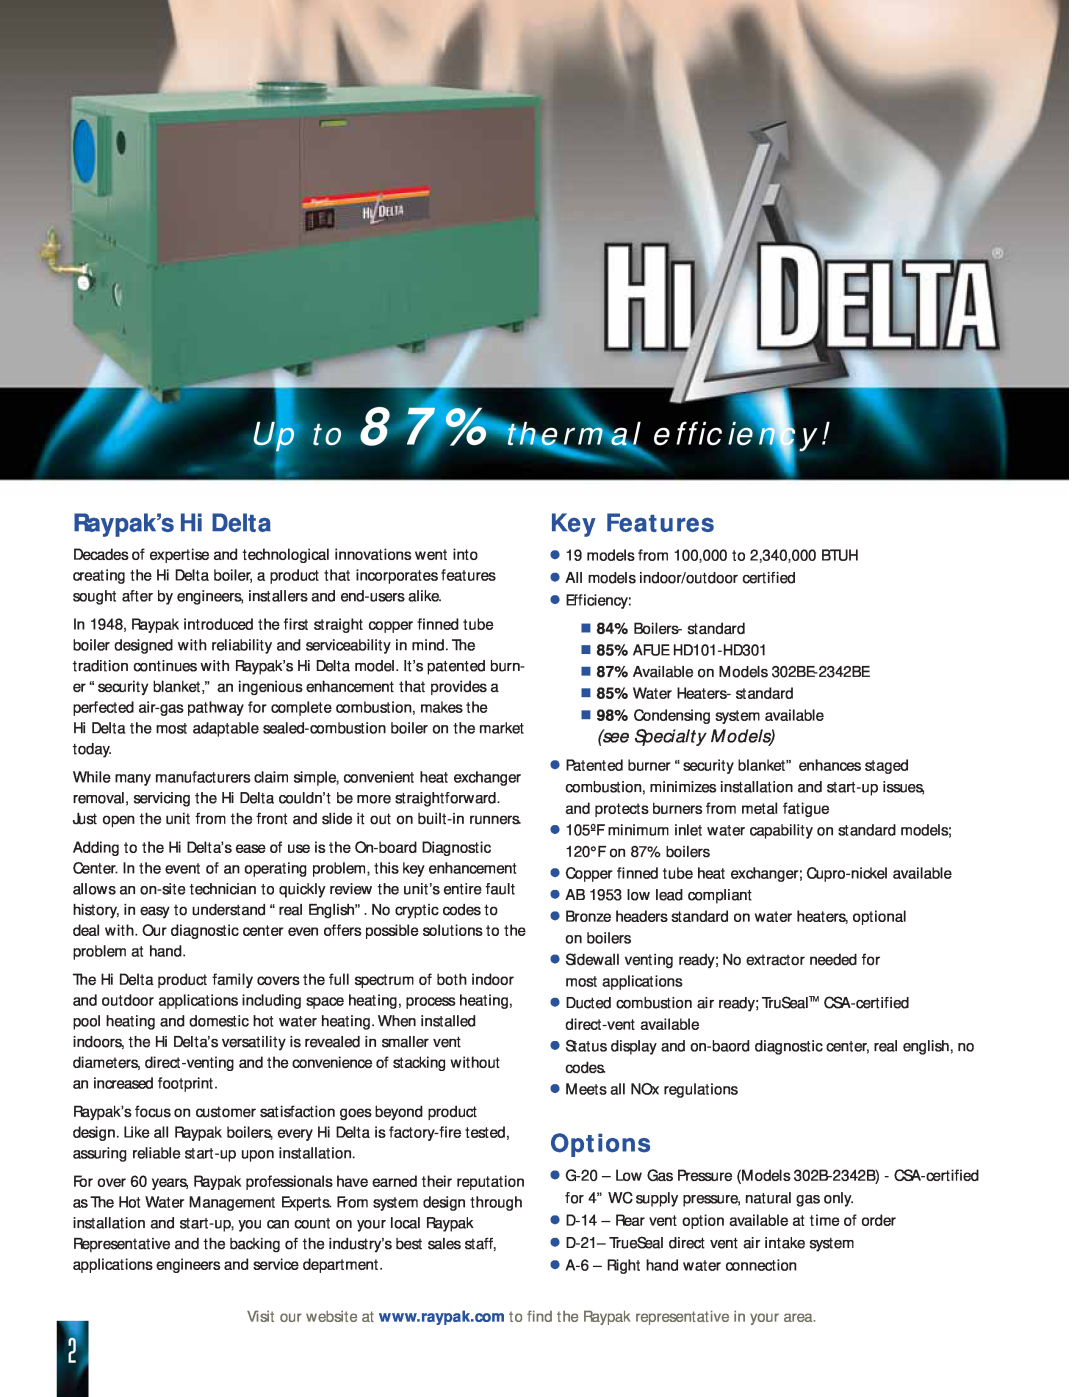 Raypak HD101 THRU 2342B manual Raypak’s Hi Delta, Key Features, Options, Up to 87% thermal efficiency 